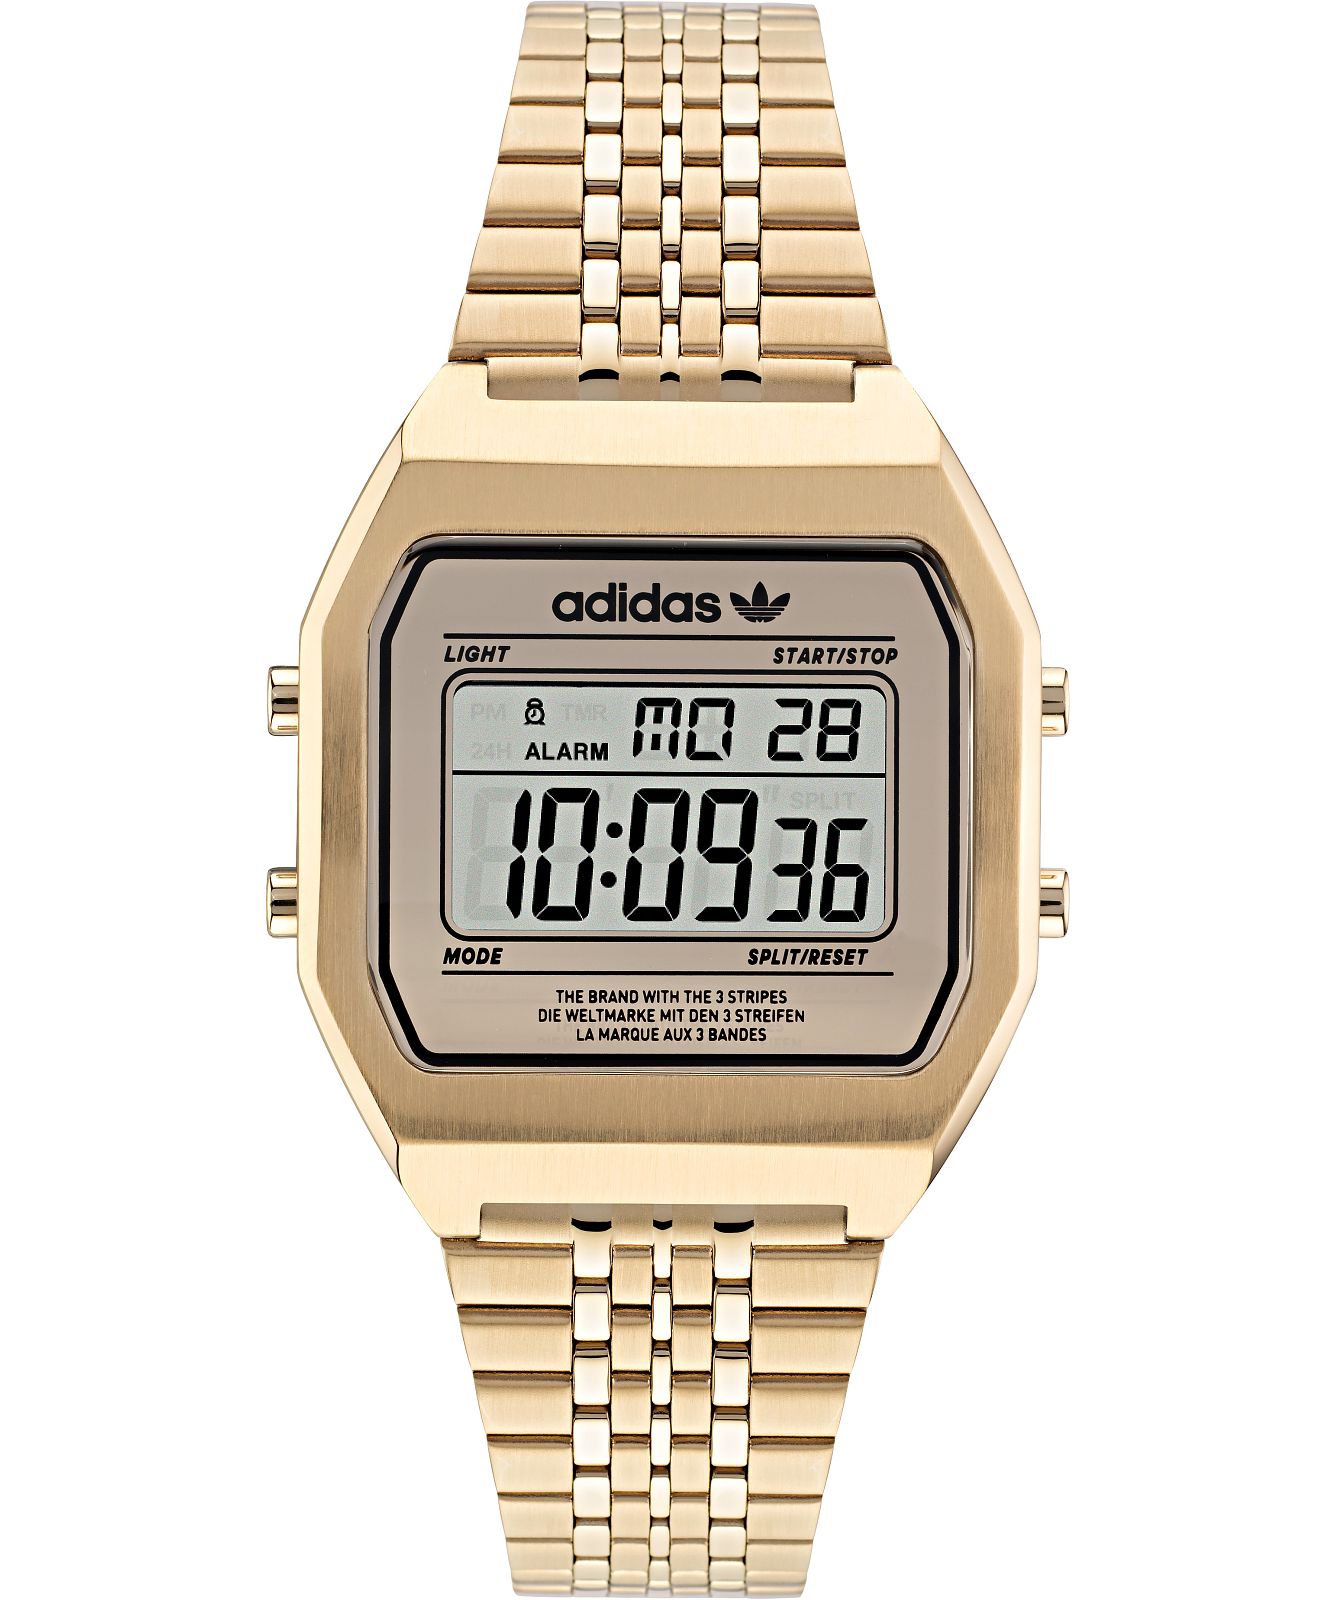 Adidas Originals AOST22074 - Watch Digital • Street Two